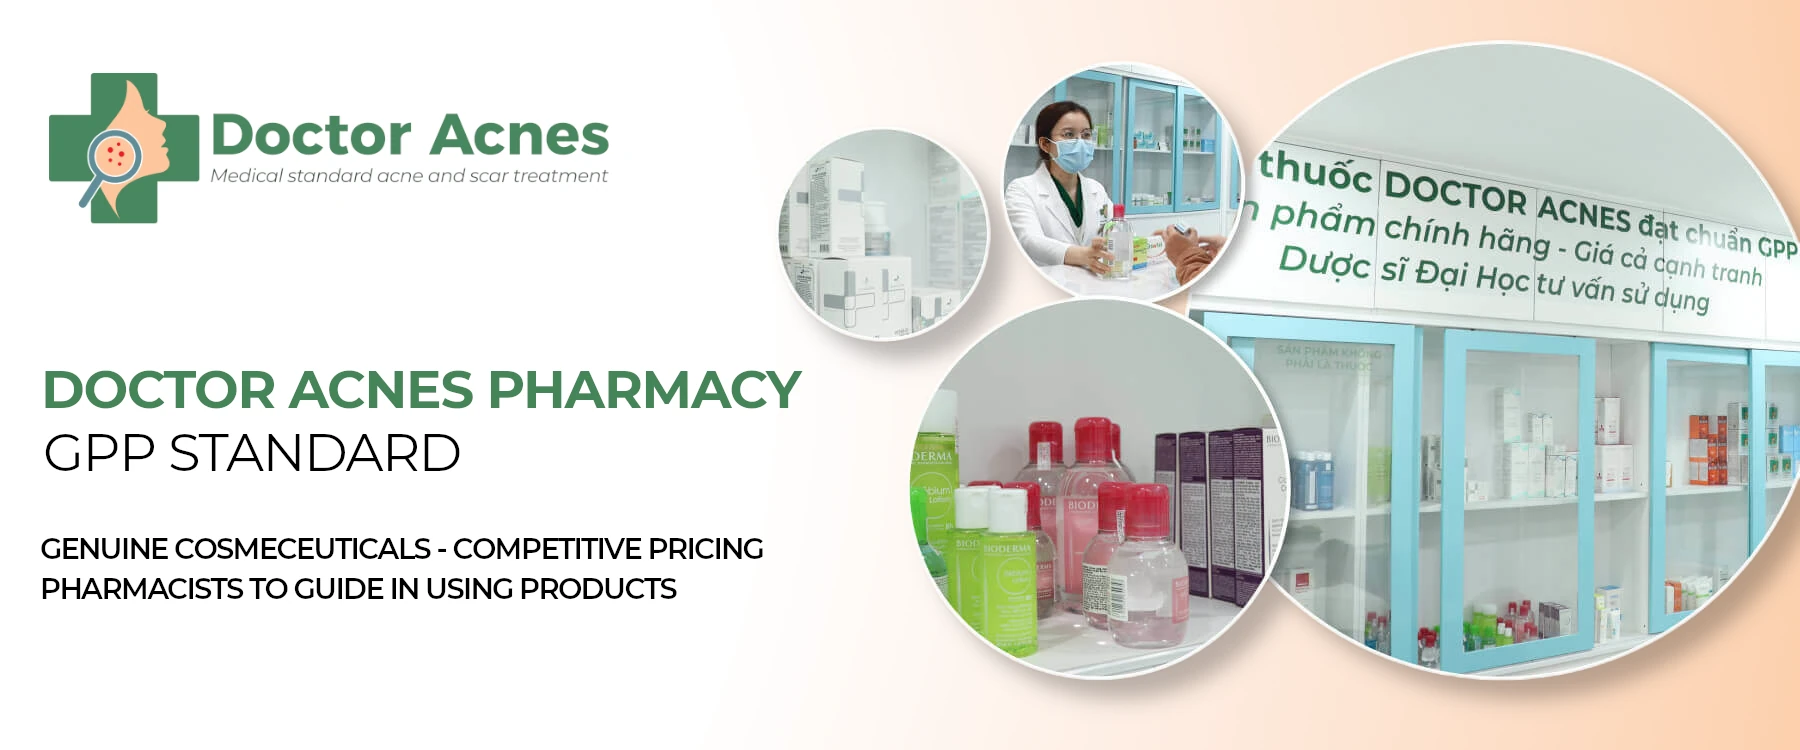 GPP Standard Doctor Acnes Pharmacy